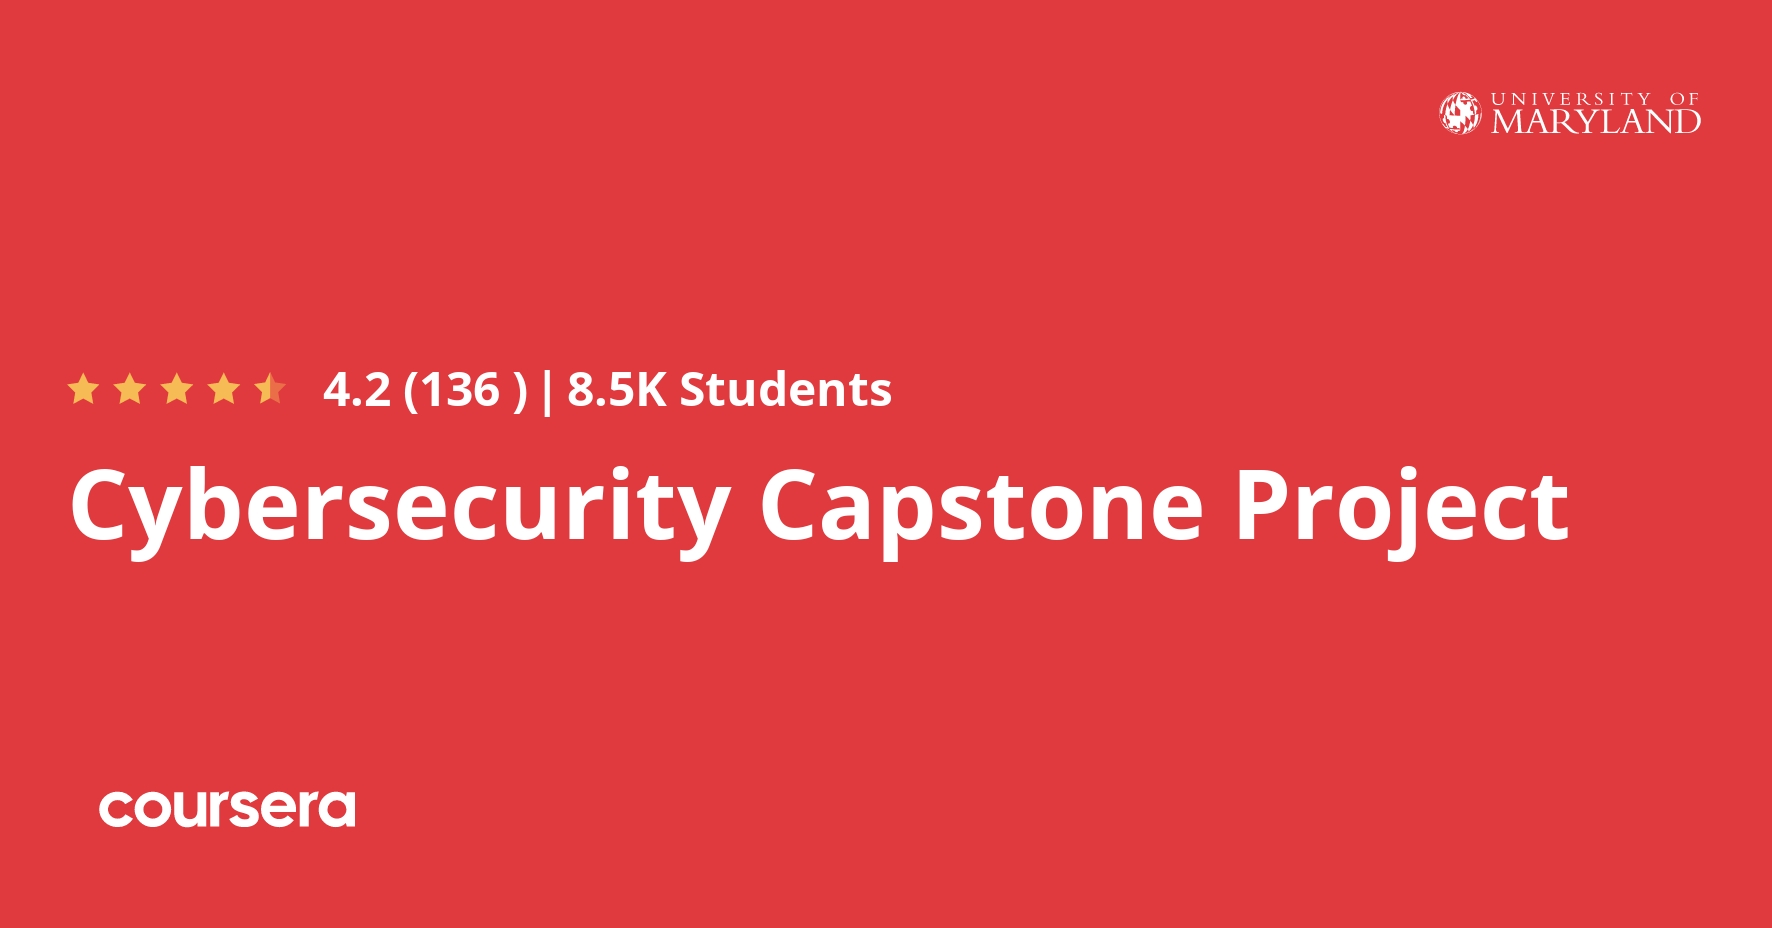 cybersecurity capstone project coursera github